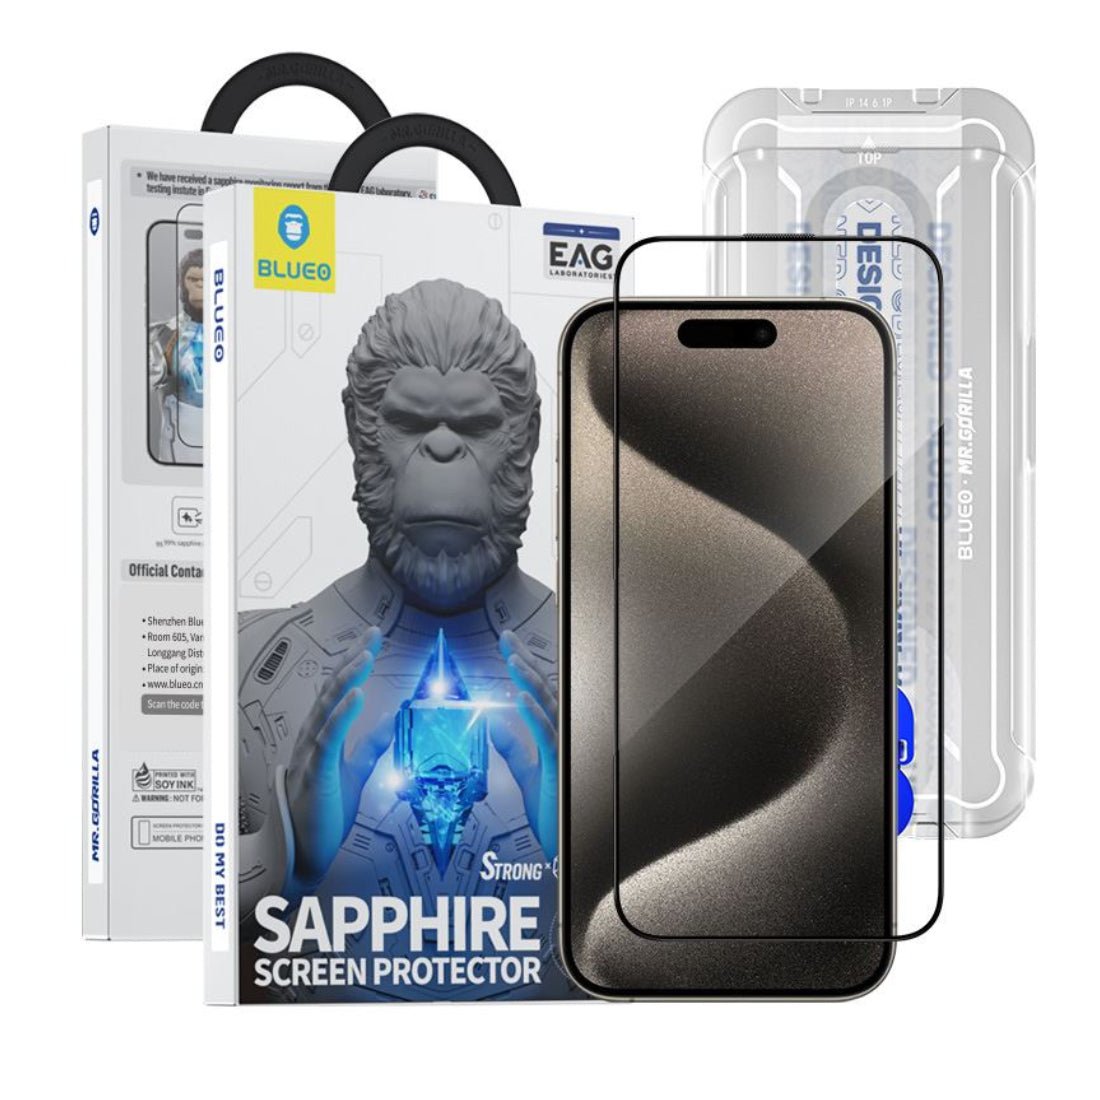 Blueo Sapphire Screen Protector With Applicator - iPhone15 Pro 6.1 - أكسسوار - Store 974 | ستور ٩٧٤